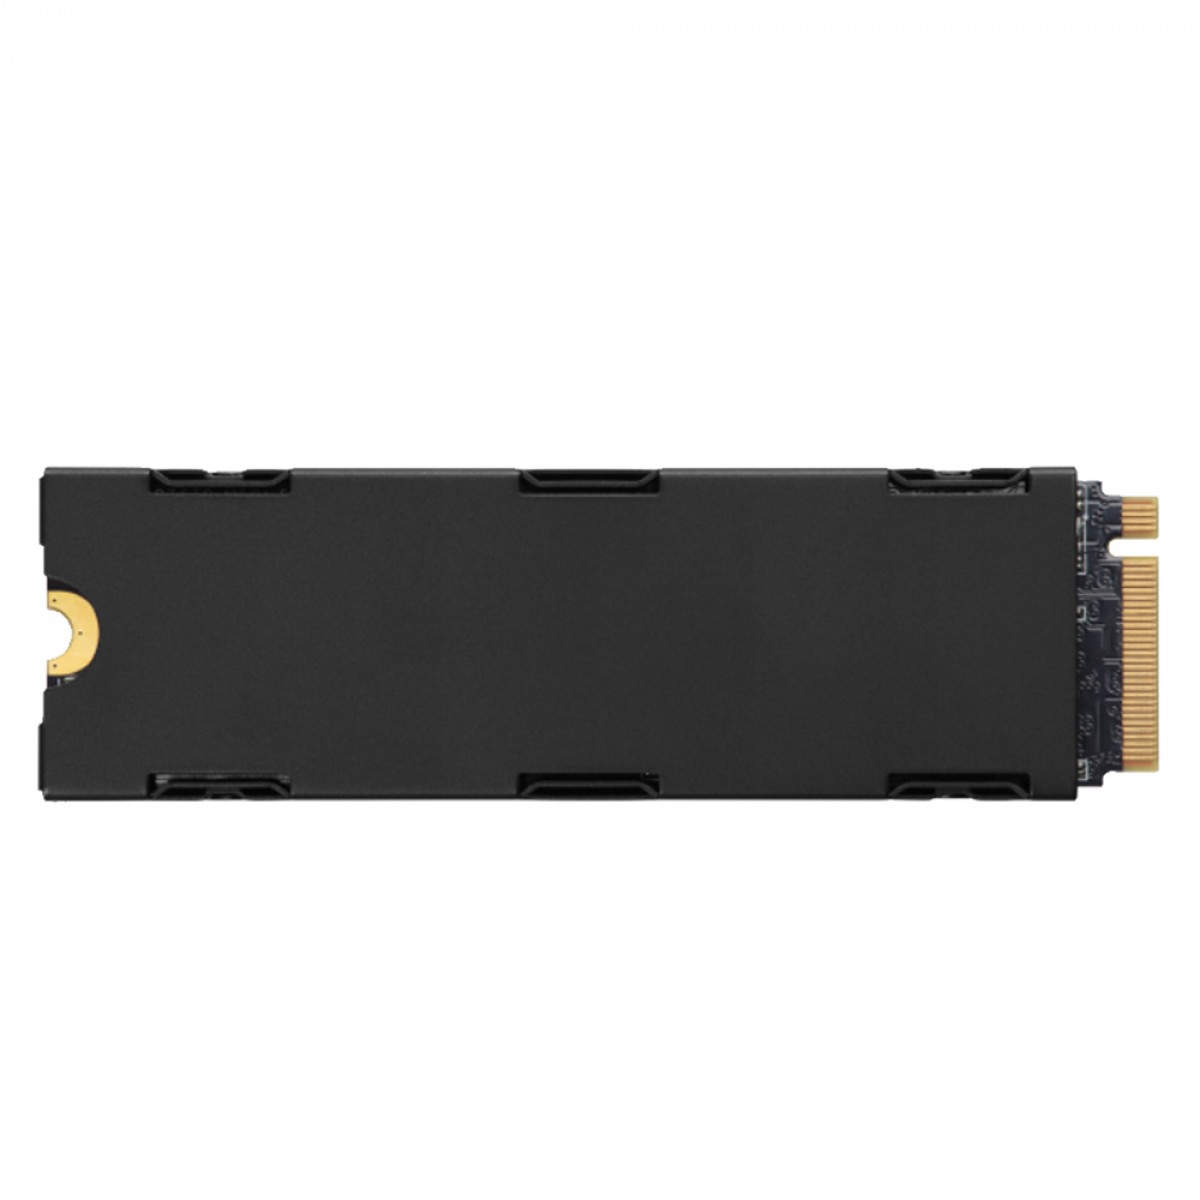 SSD Corsair MP600 Pro LPX, 500GB, M.2 2280, Leitura 7.100MBs e Gravação 3.700MBs, CSSD-F0500GBMP600PLP